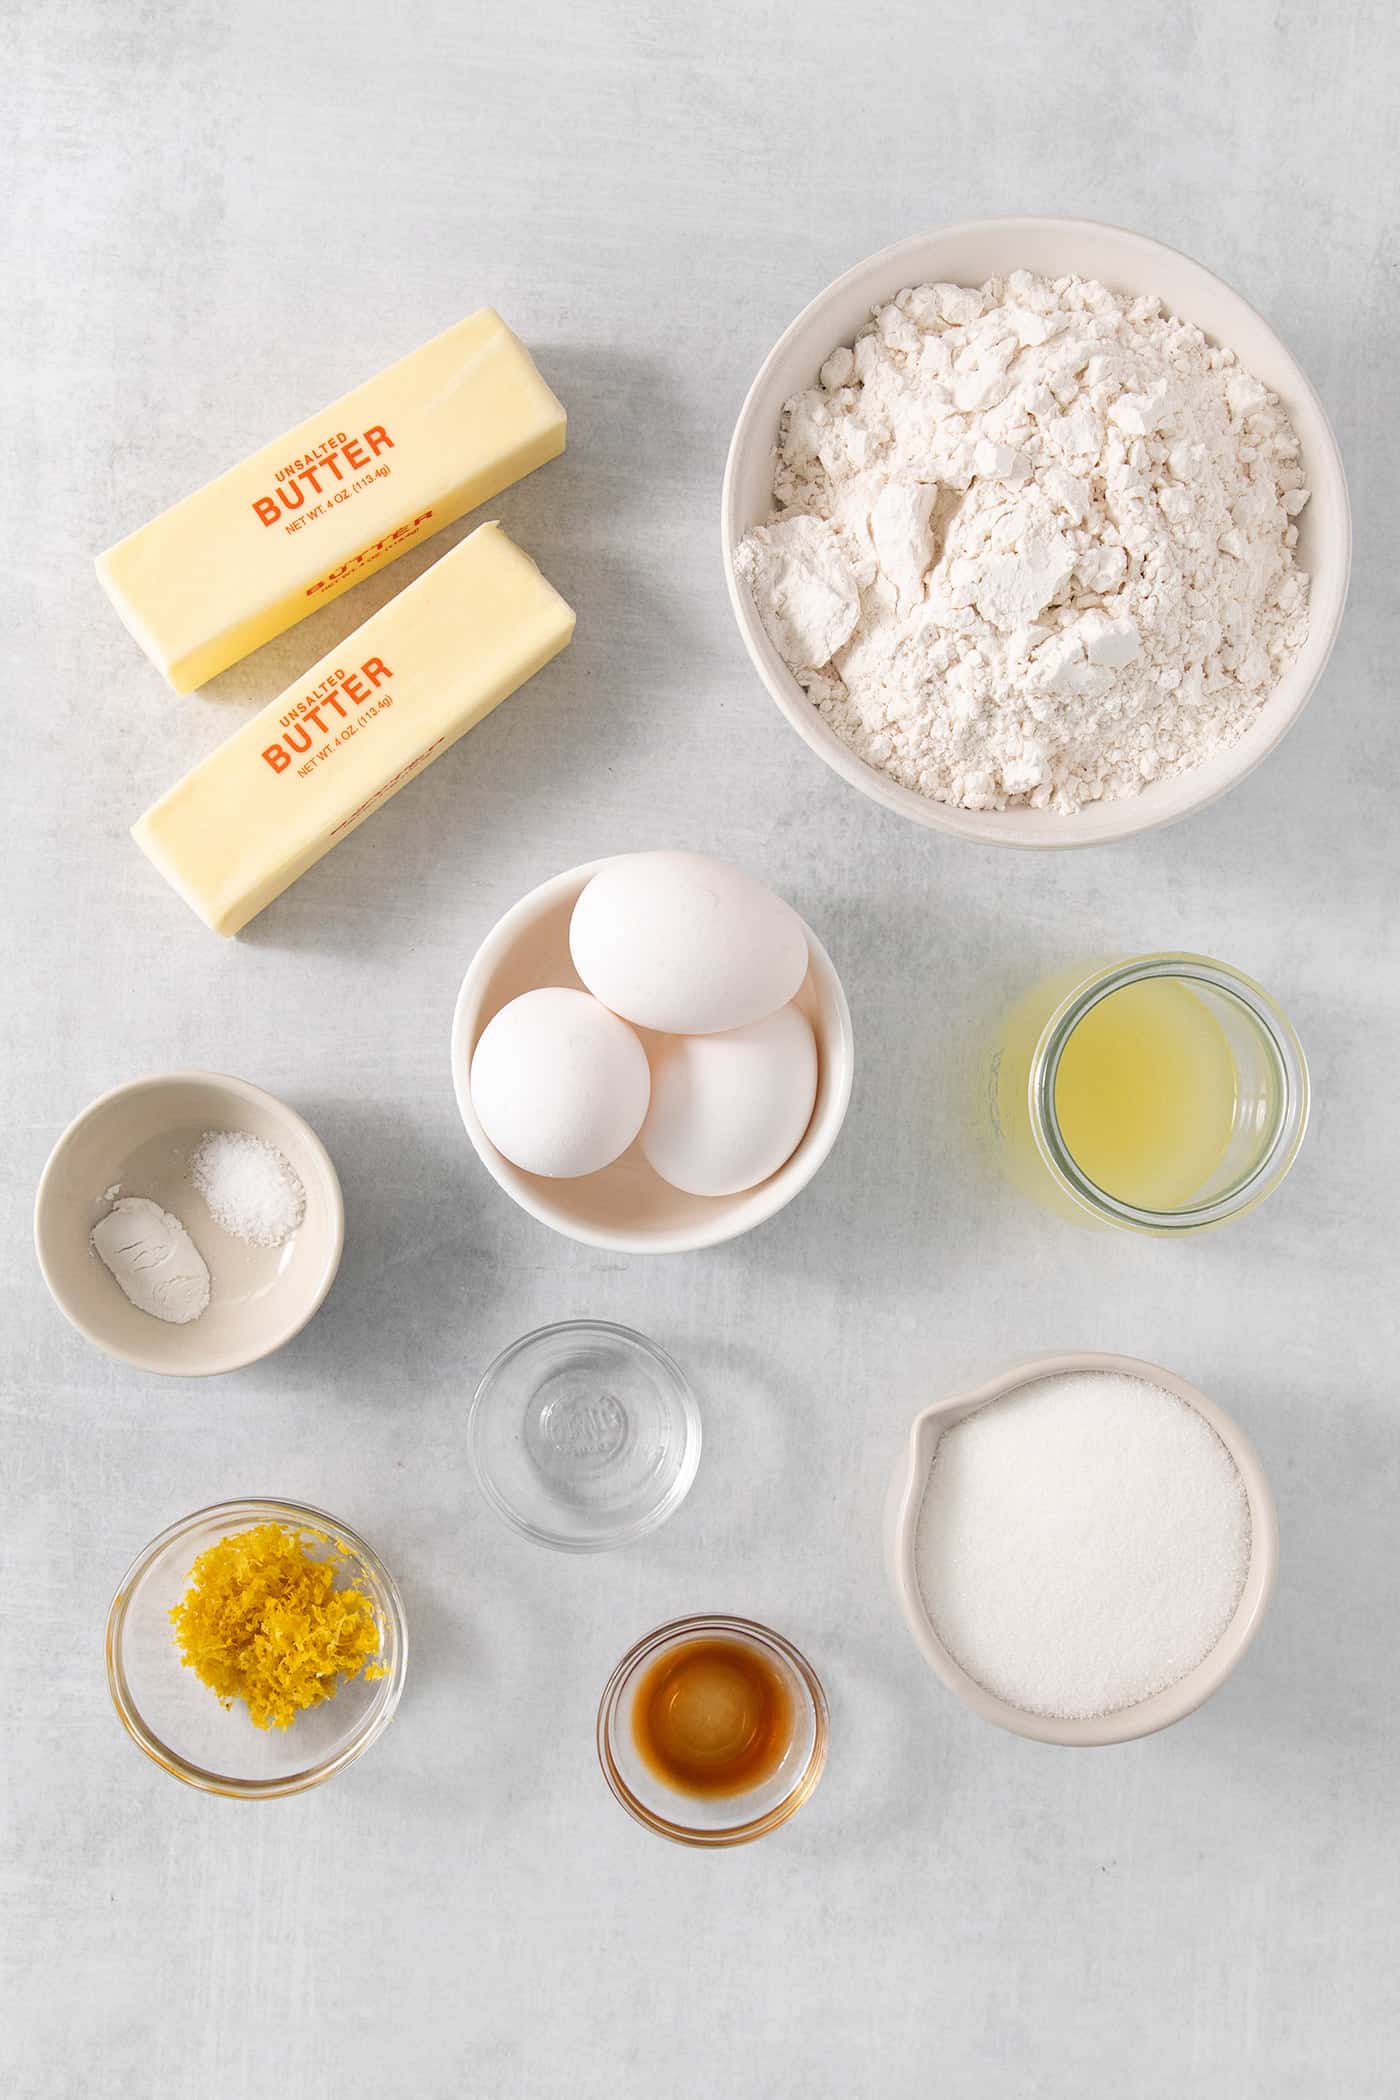 Ingredients for lemon pound cake: butter, sugar, eggs, flour, lemon zest, and vanilla.